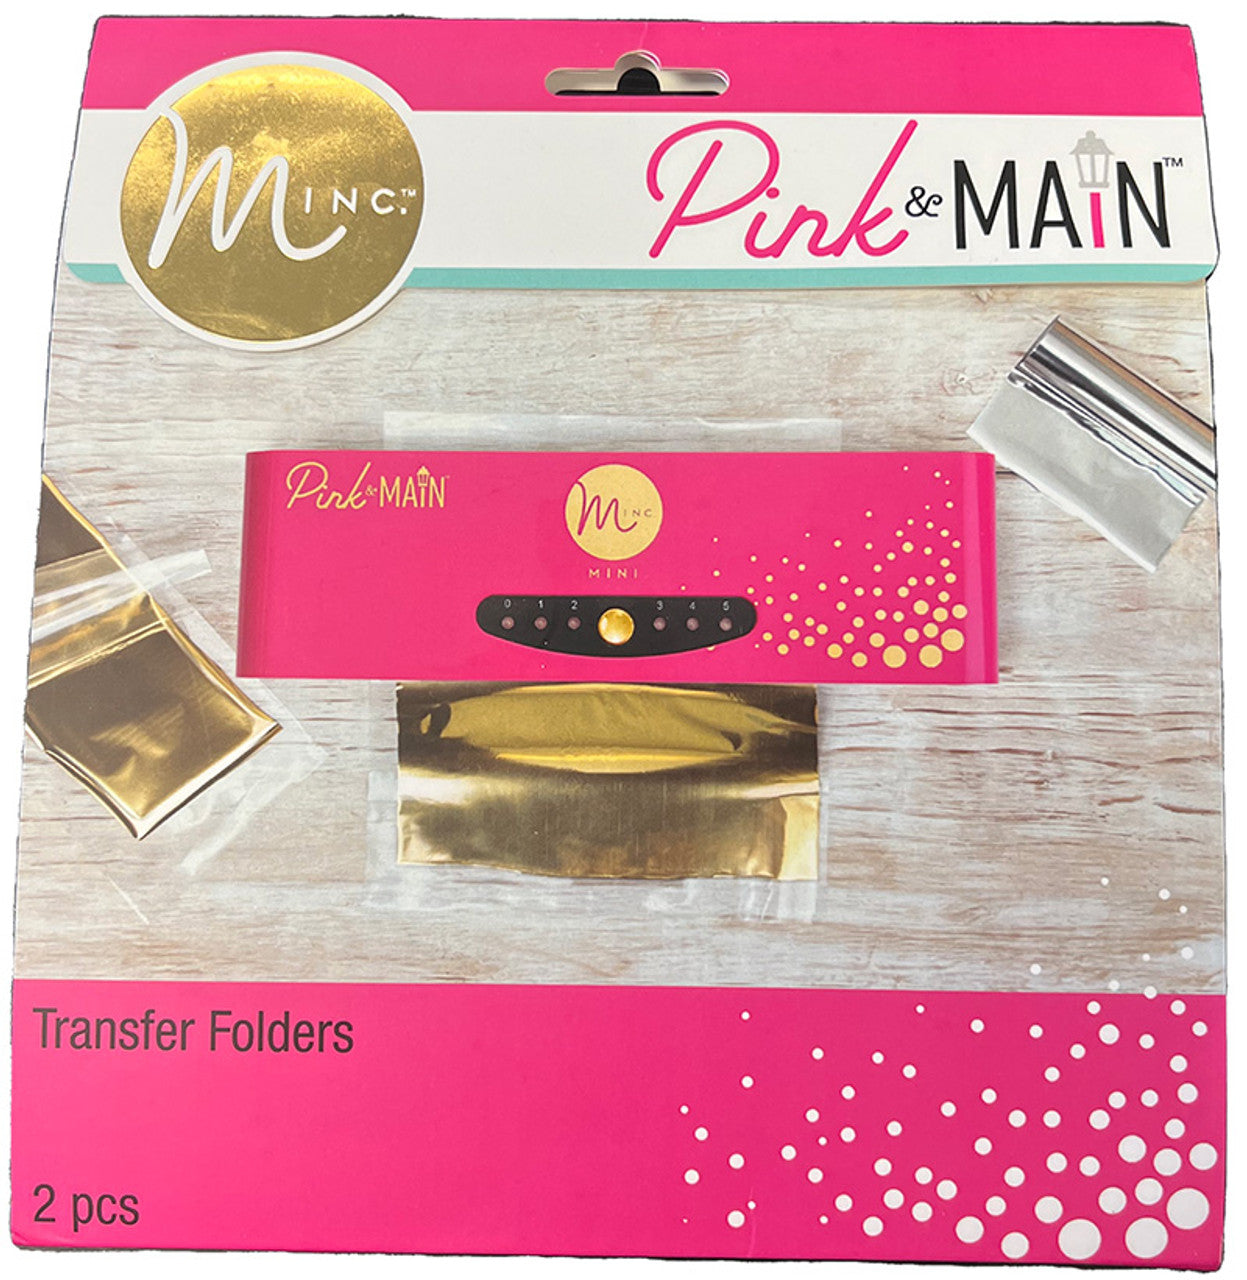 Pink and Main Mini Minc Transfer Folders